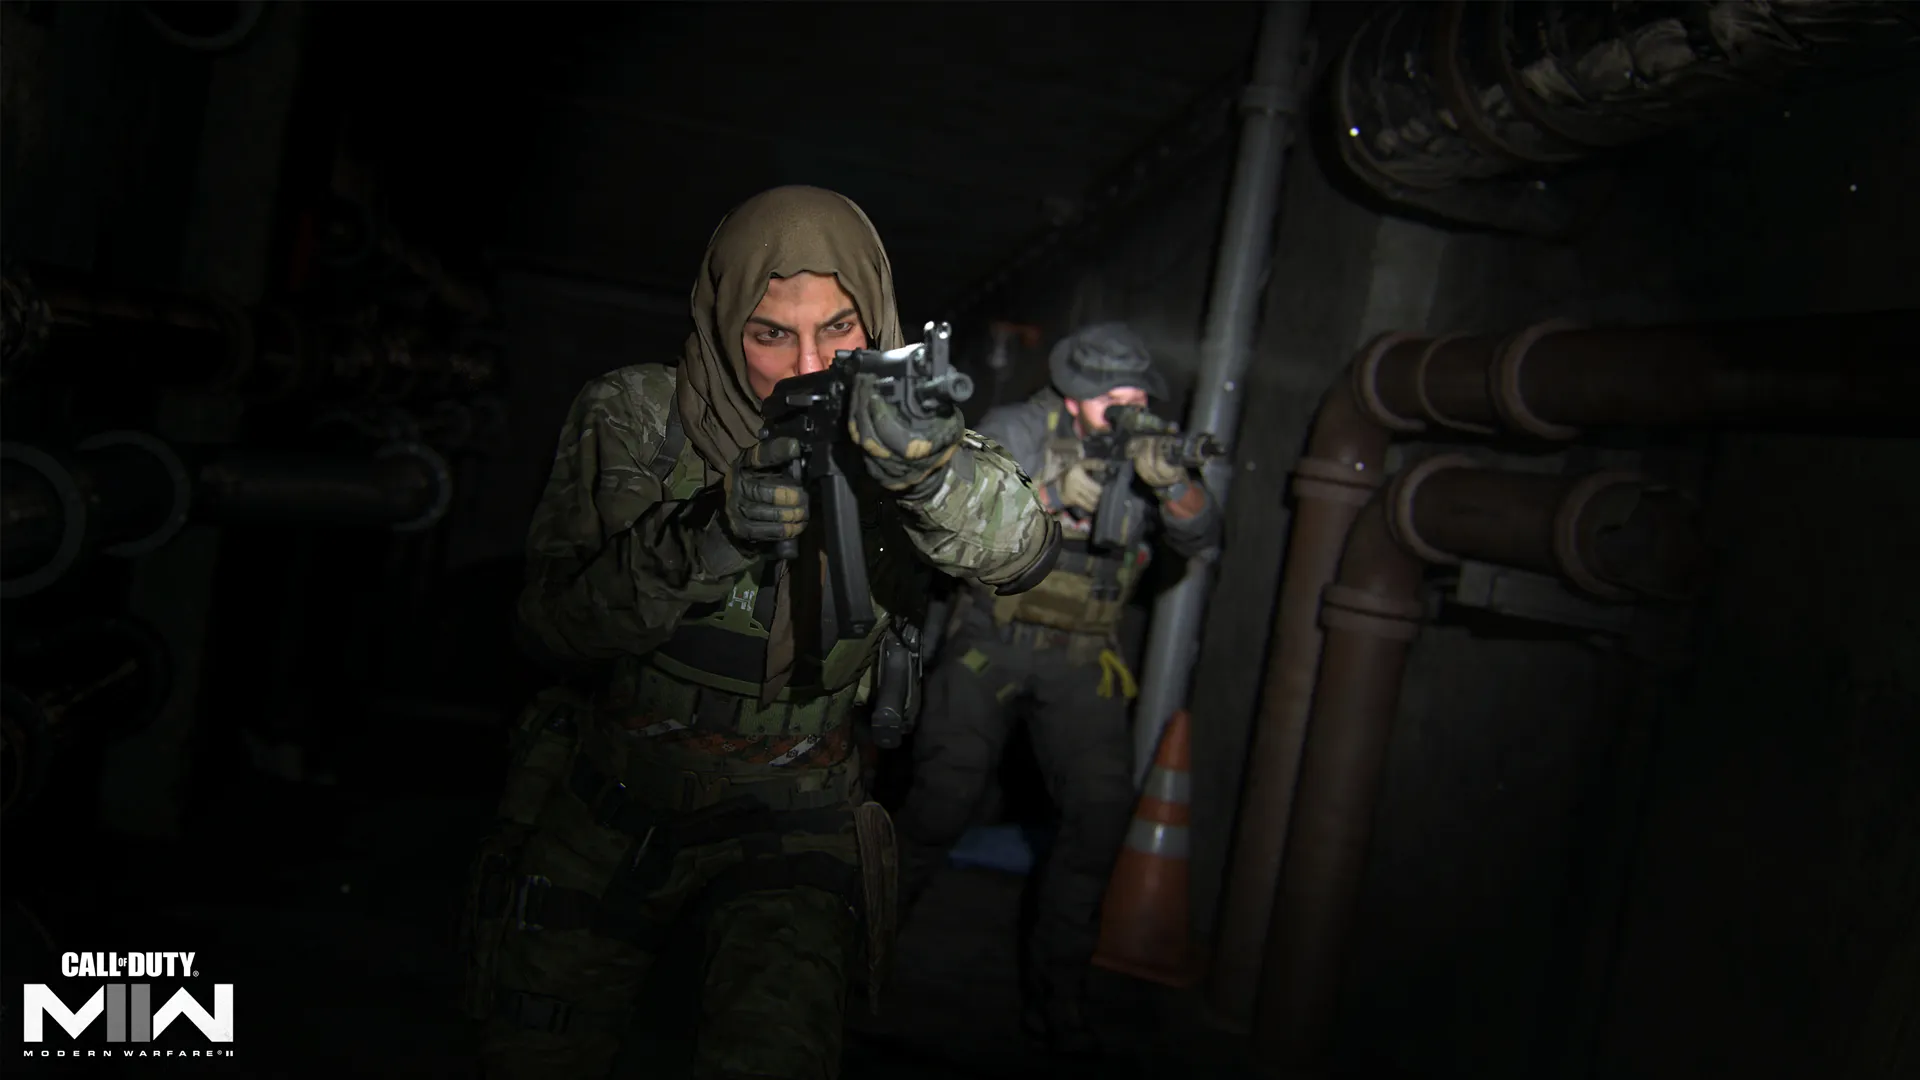 How to fix the Travis-Rilea error in Call of Duty: Modern Warfare 2